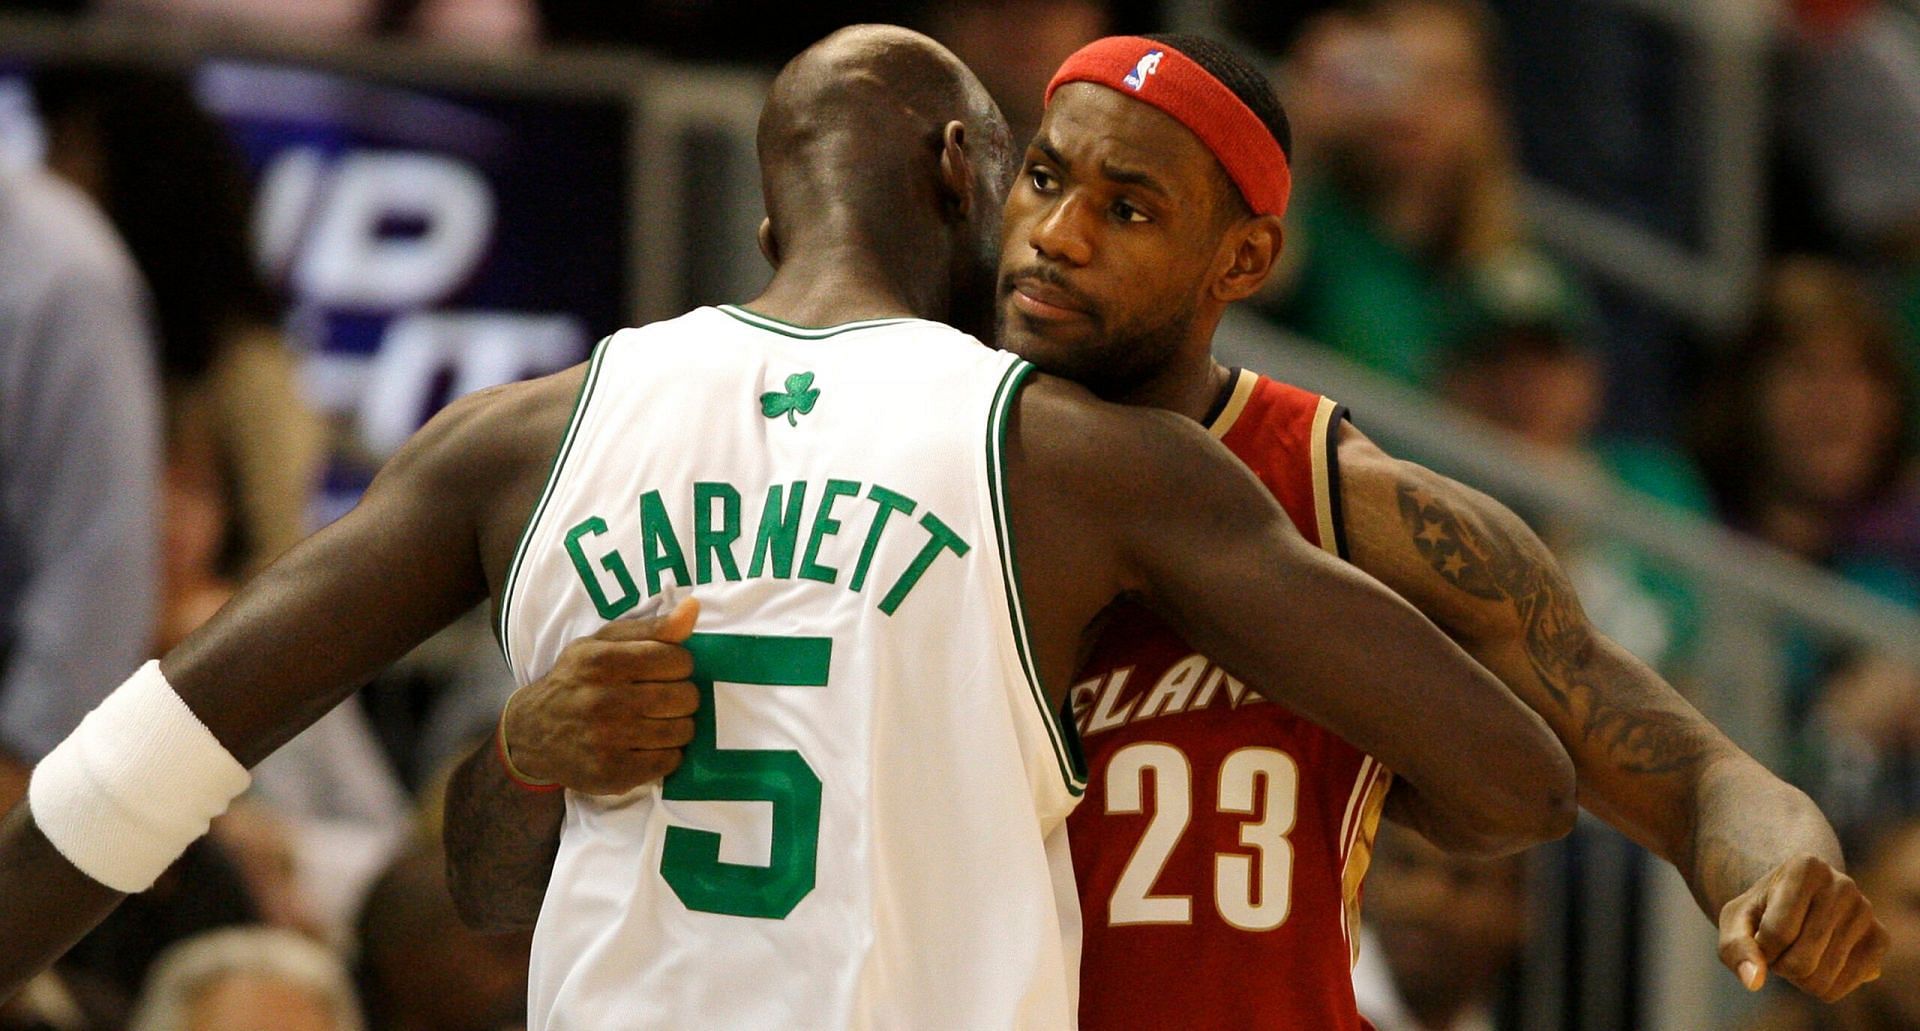 Kevin Garnett and LeBron James. (Photo: Boston.com)